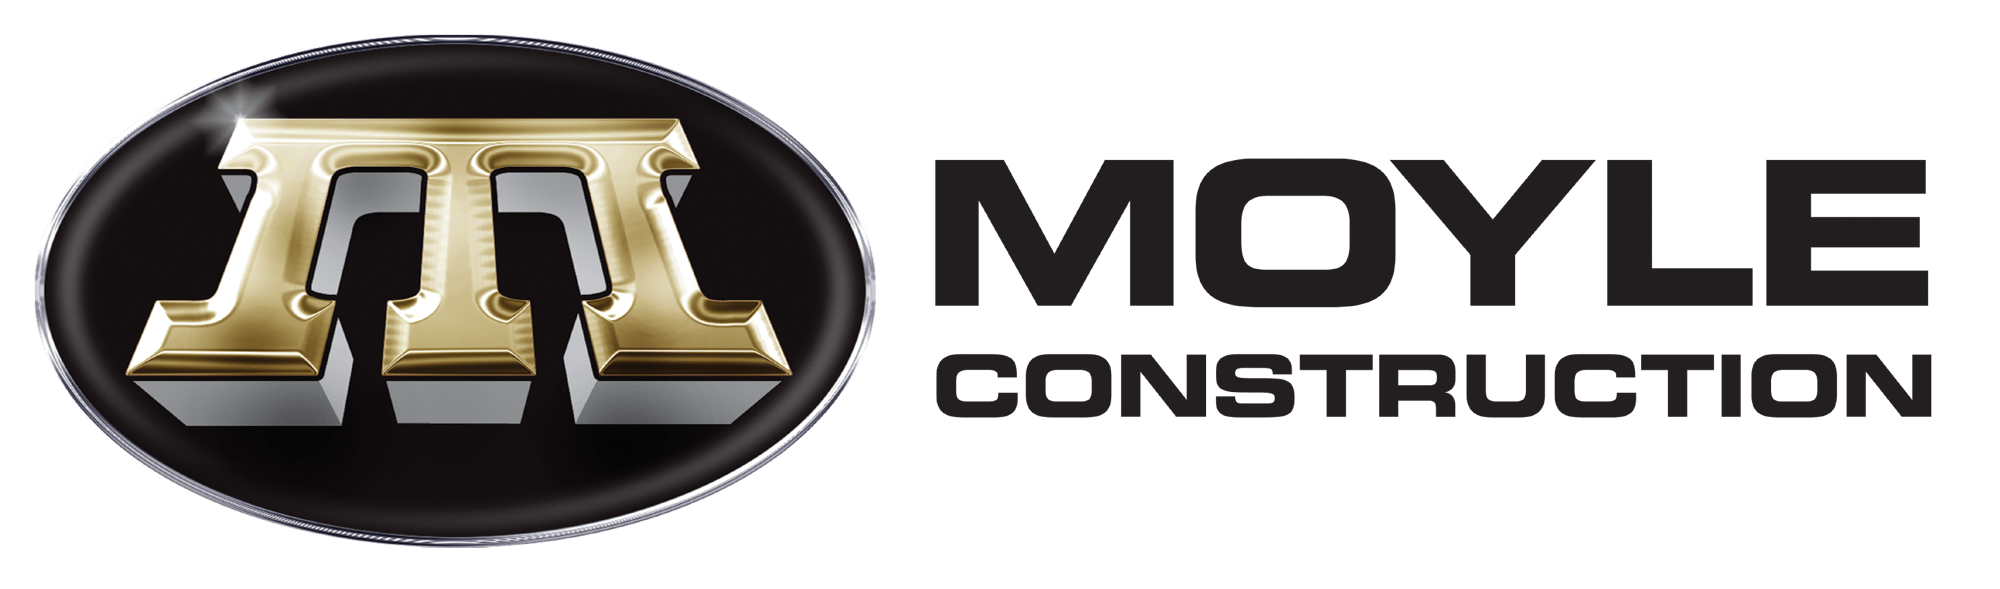 Moyle Construction Logo